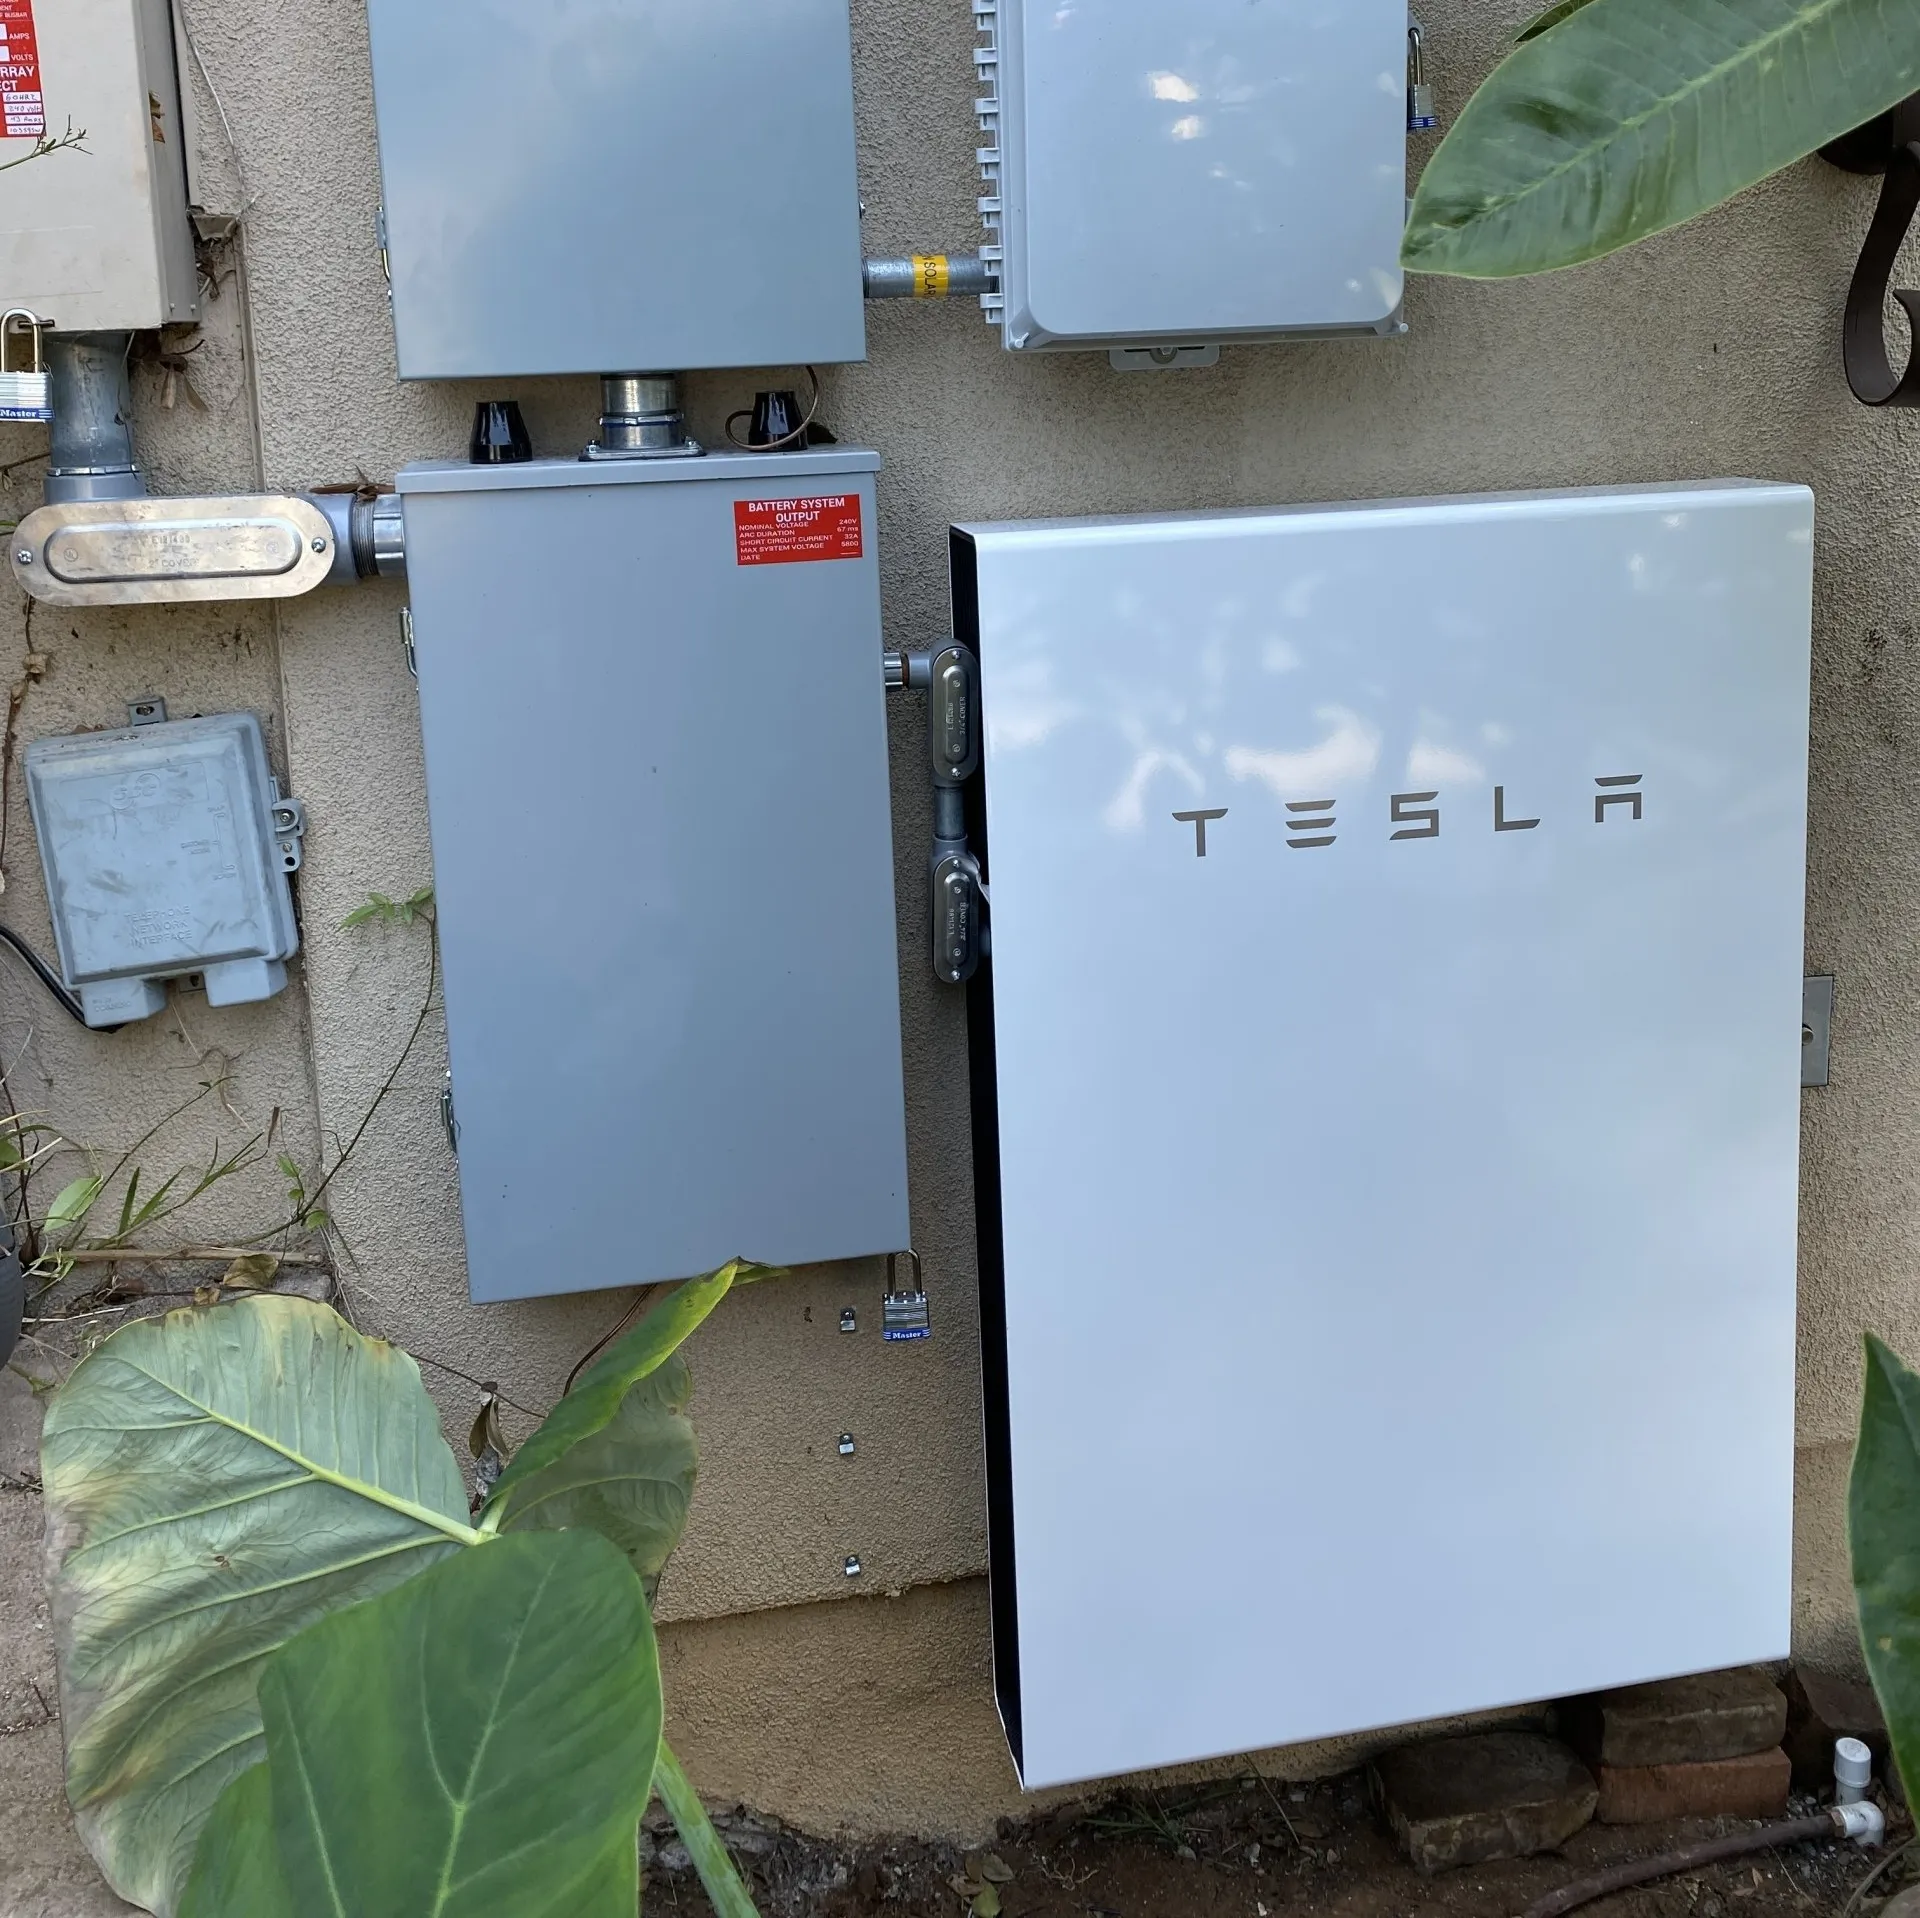 Tesla Battery Storage